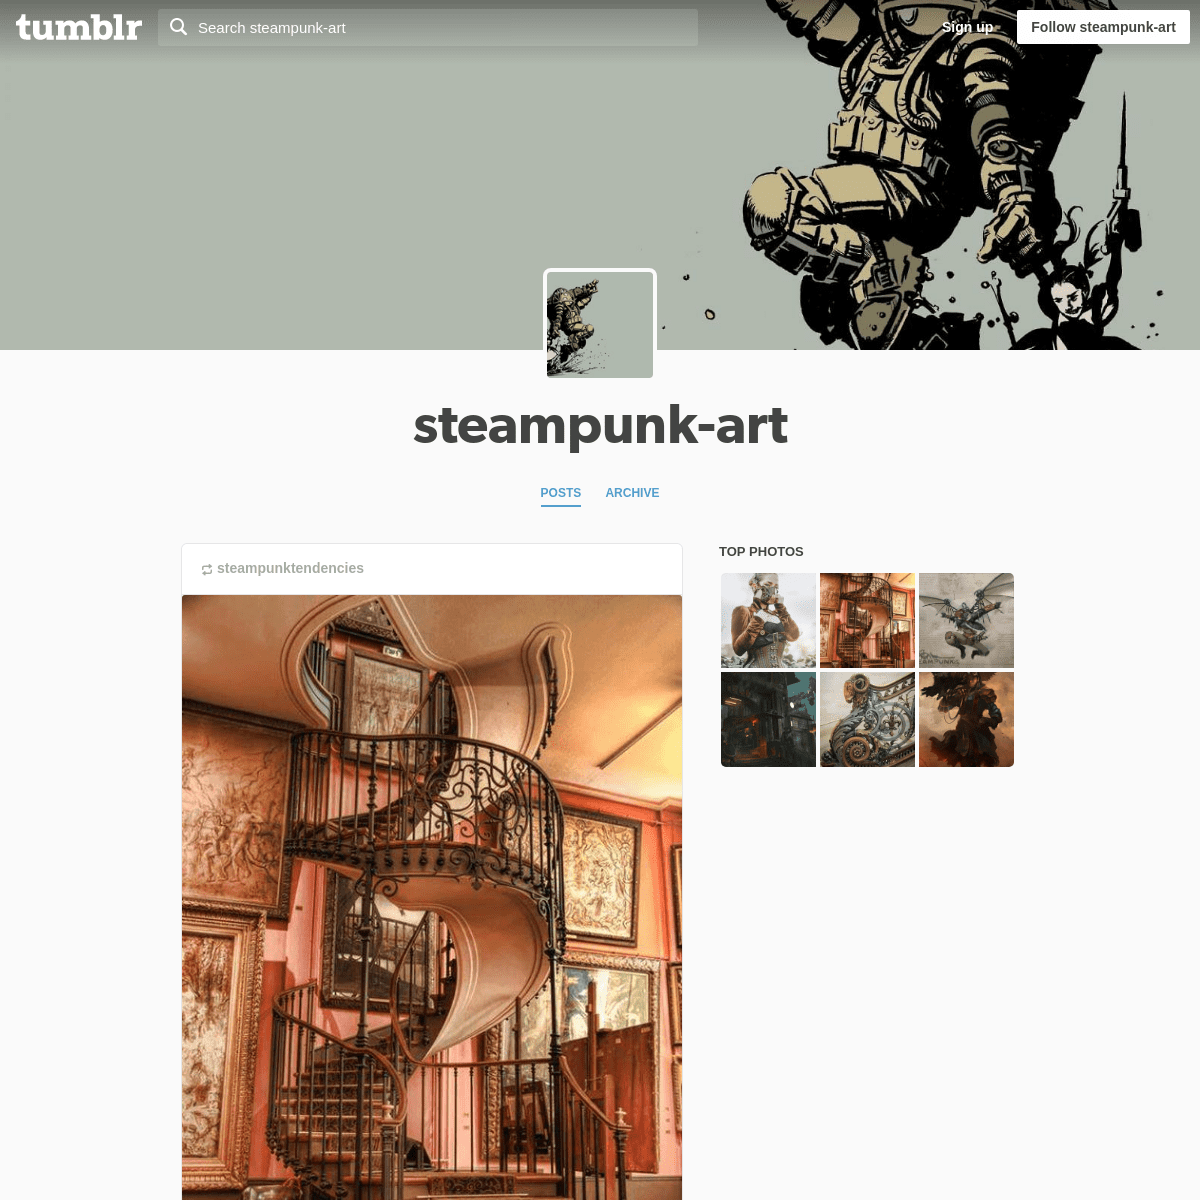 steampunk-art